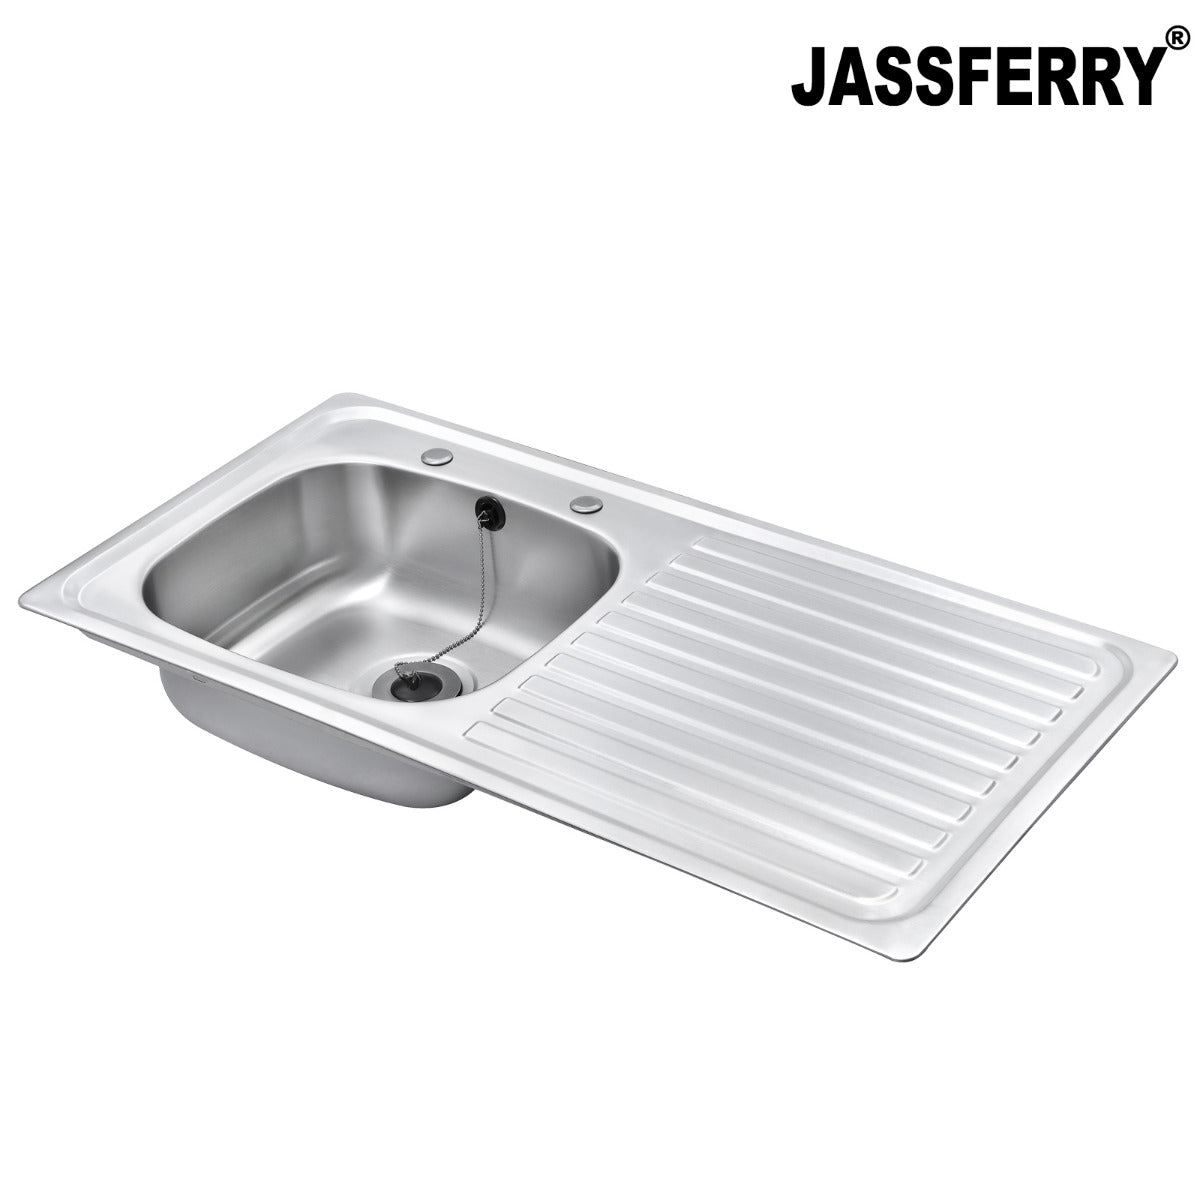 JassferryJASSFERRY Two Tap Holes Stainless Steel Kitchen Sink 1 Bowl Righthand DrainerKitchen Sinks